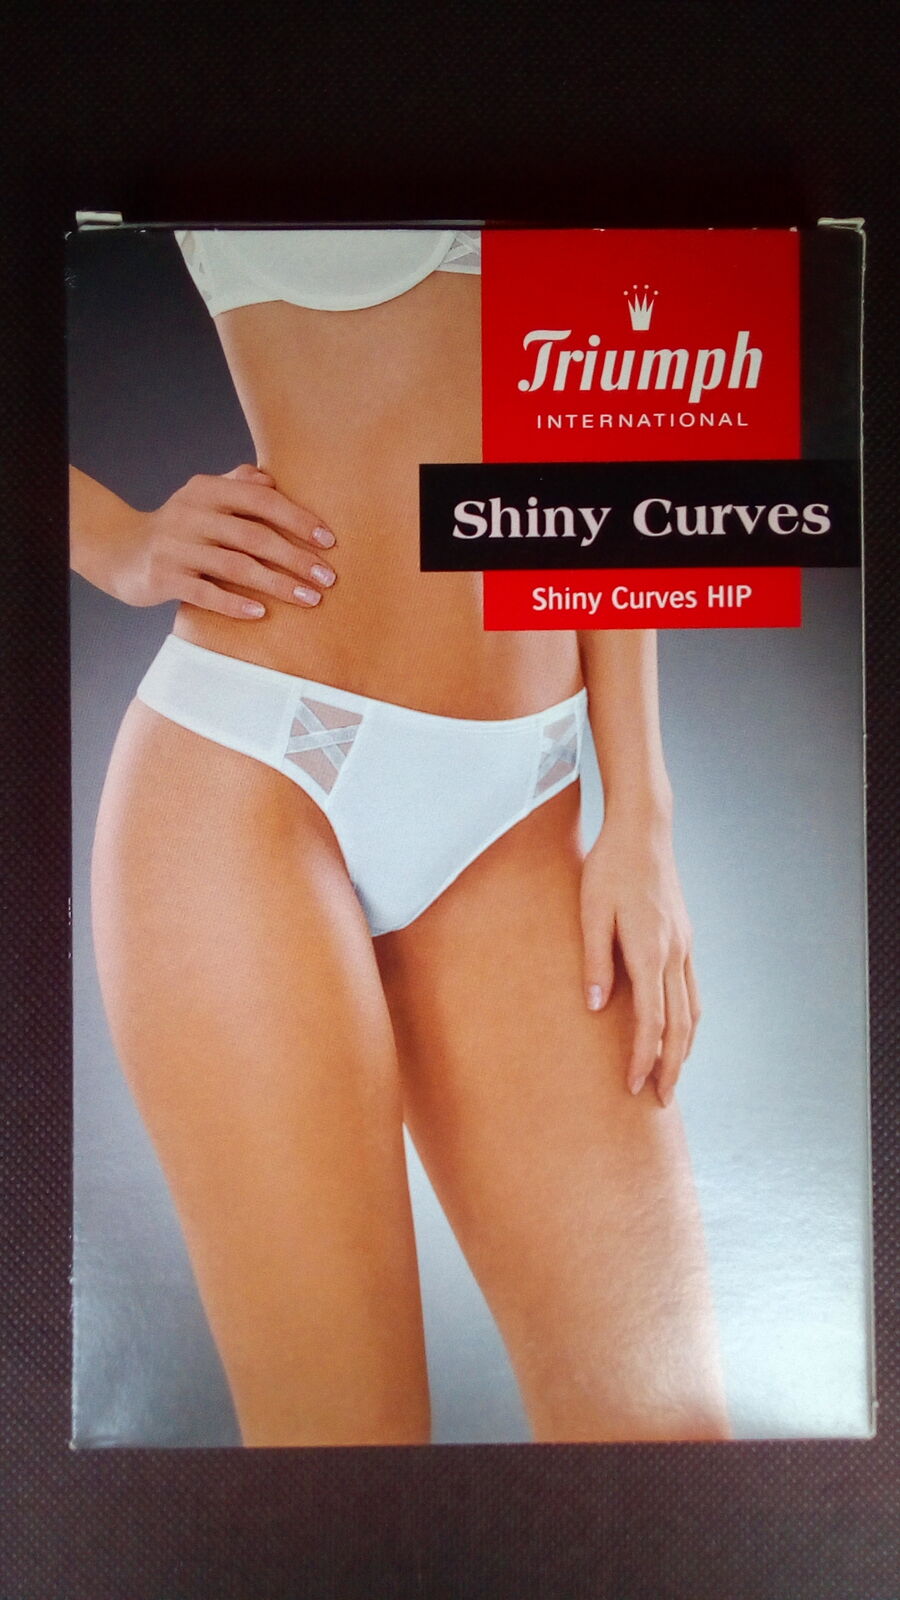 Triumph Shiny Curves HIP - Afbeelding 1 van 1